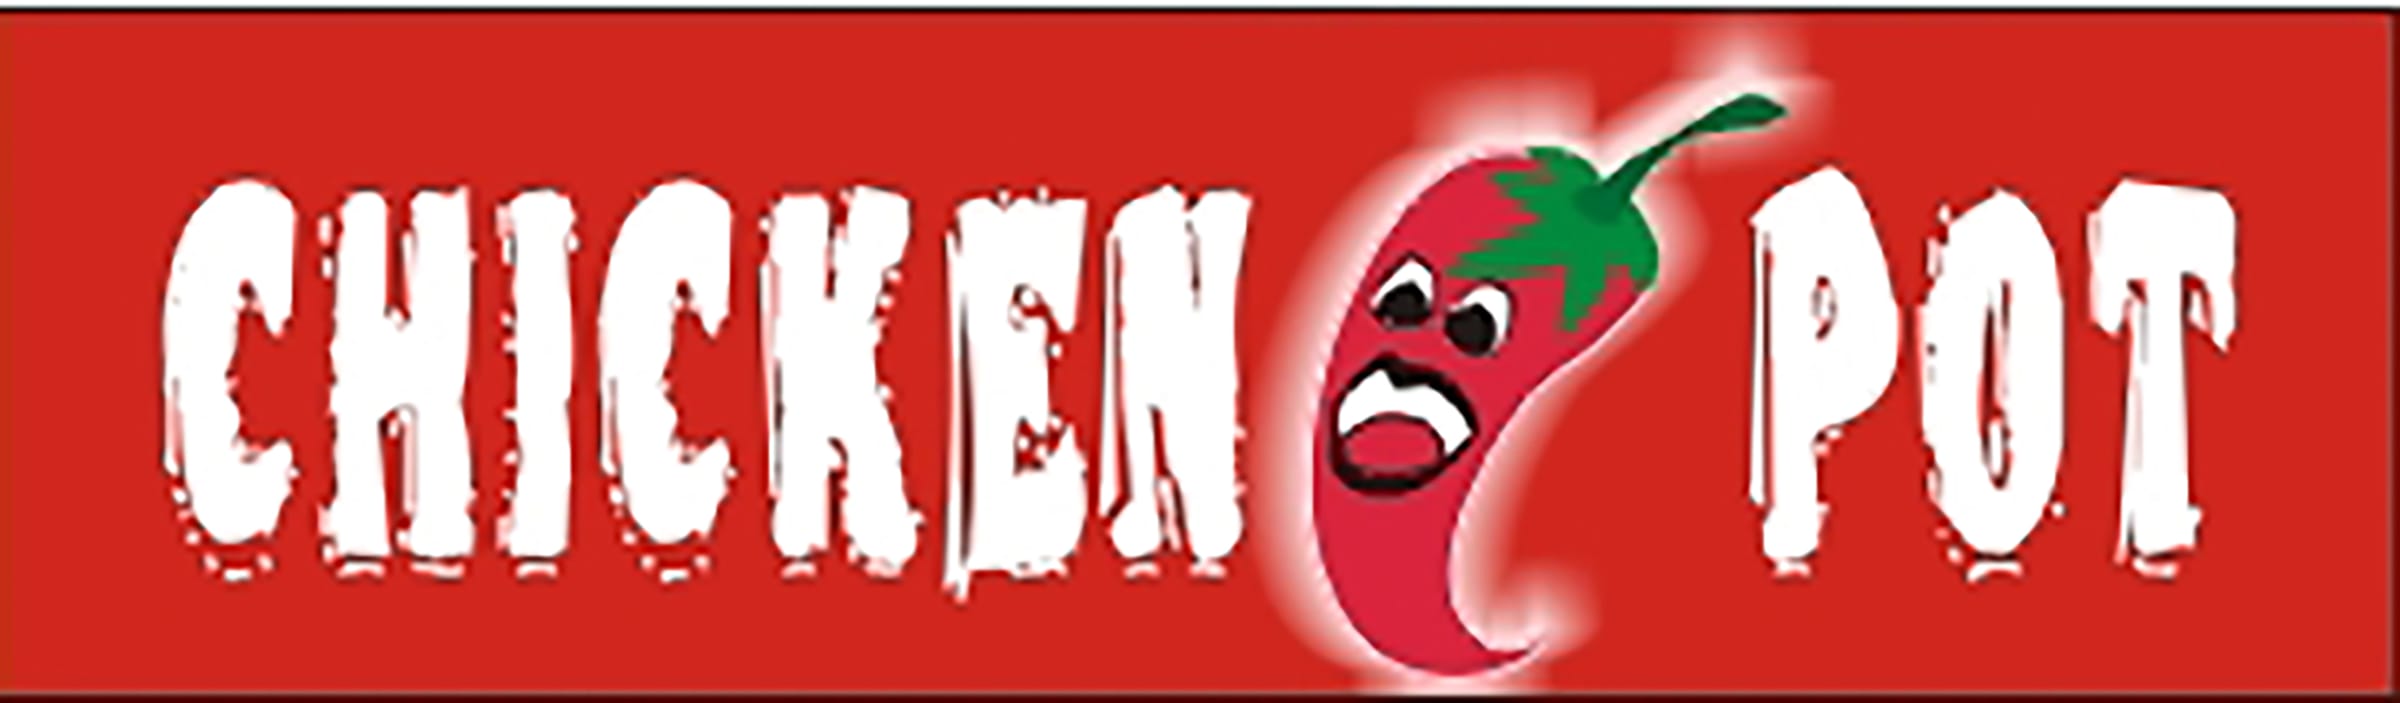 Company Logo - Chicken Hotpot